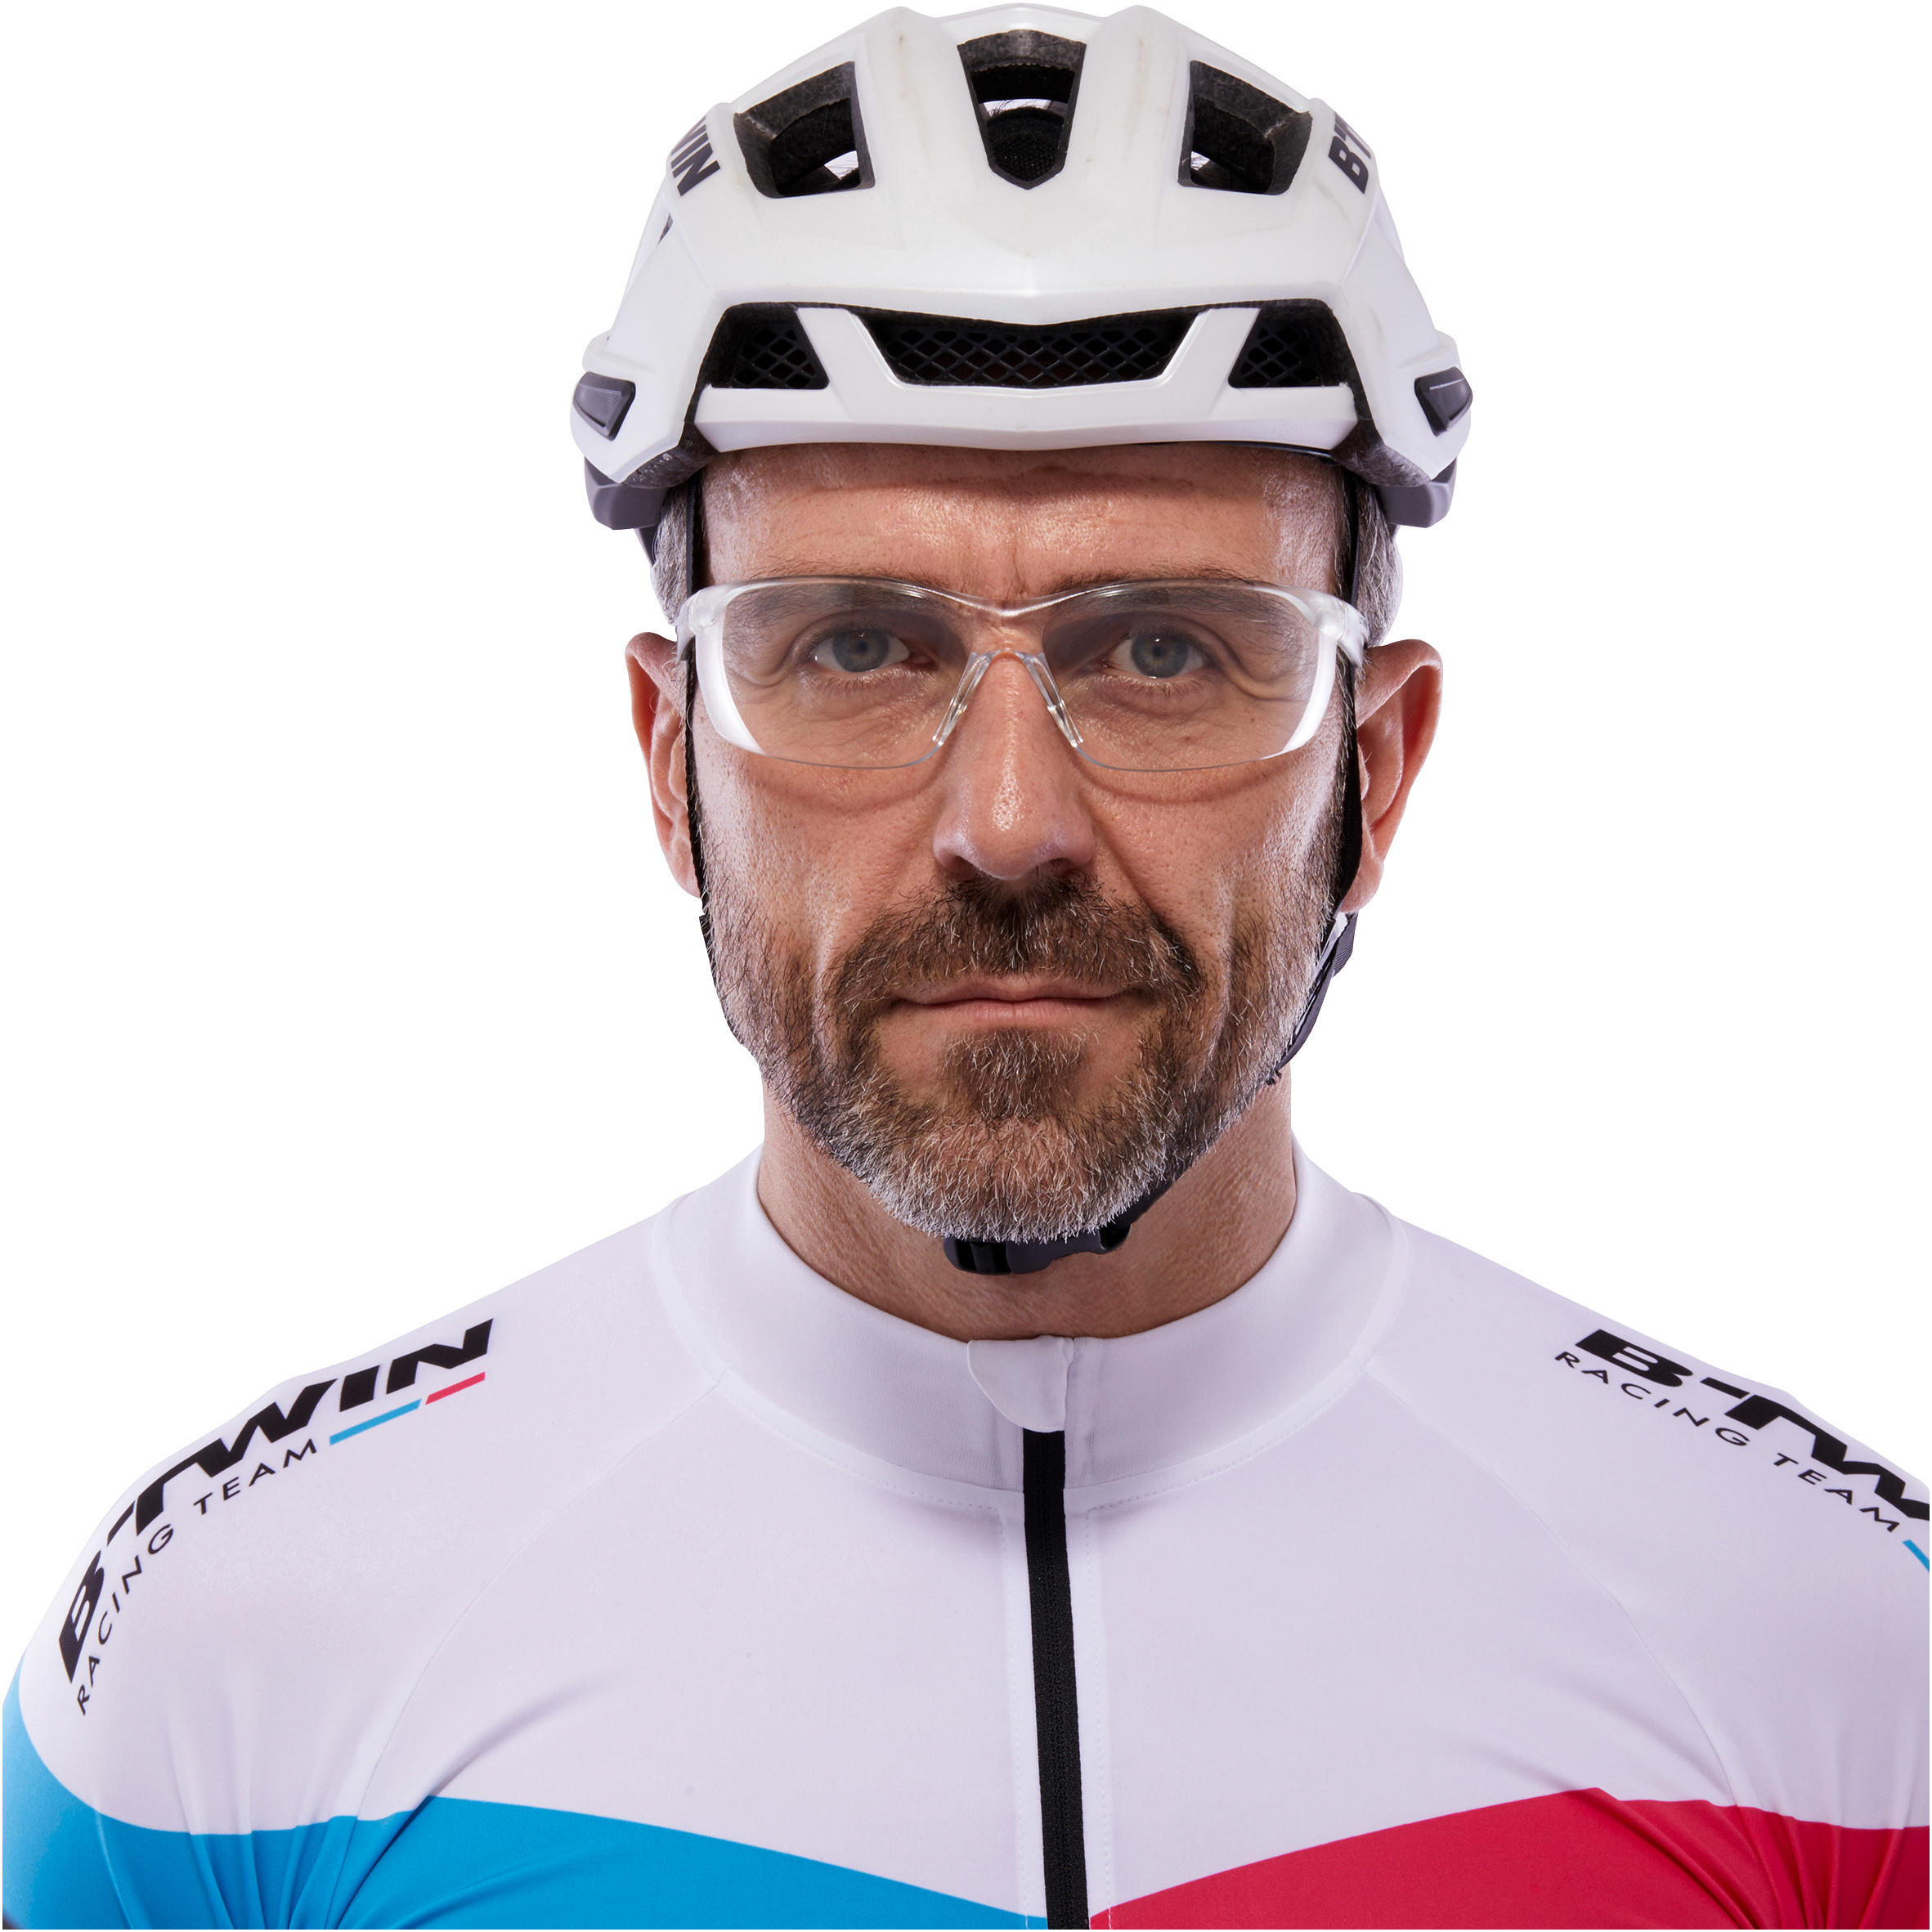 transparent cycling glasses